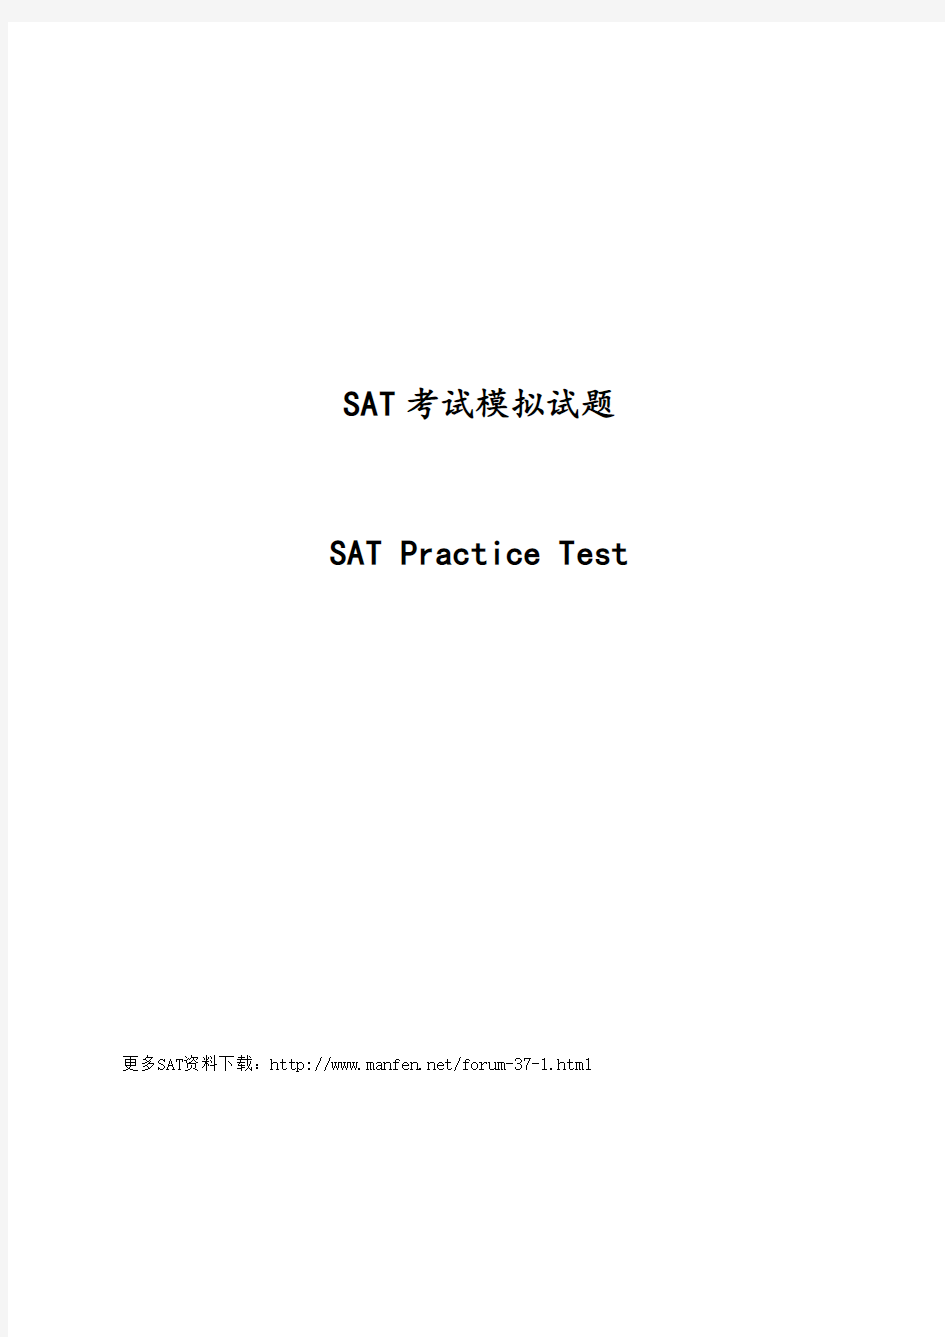 SAT Princeton Review Practice Test 11